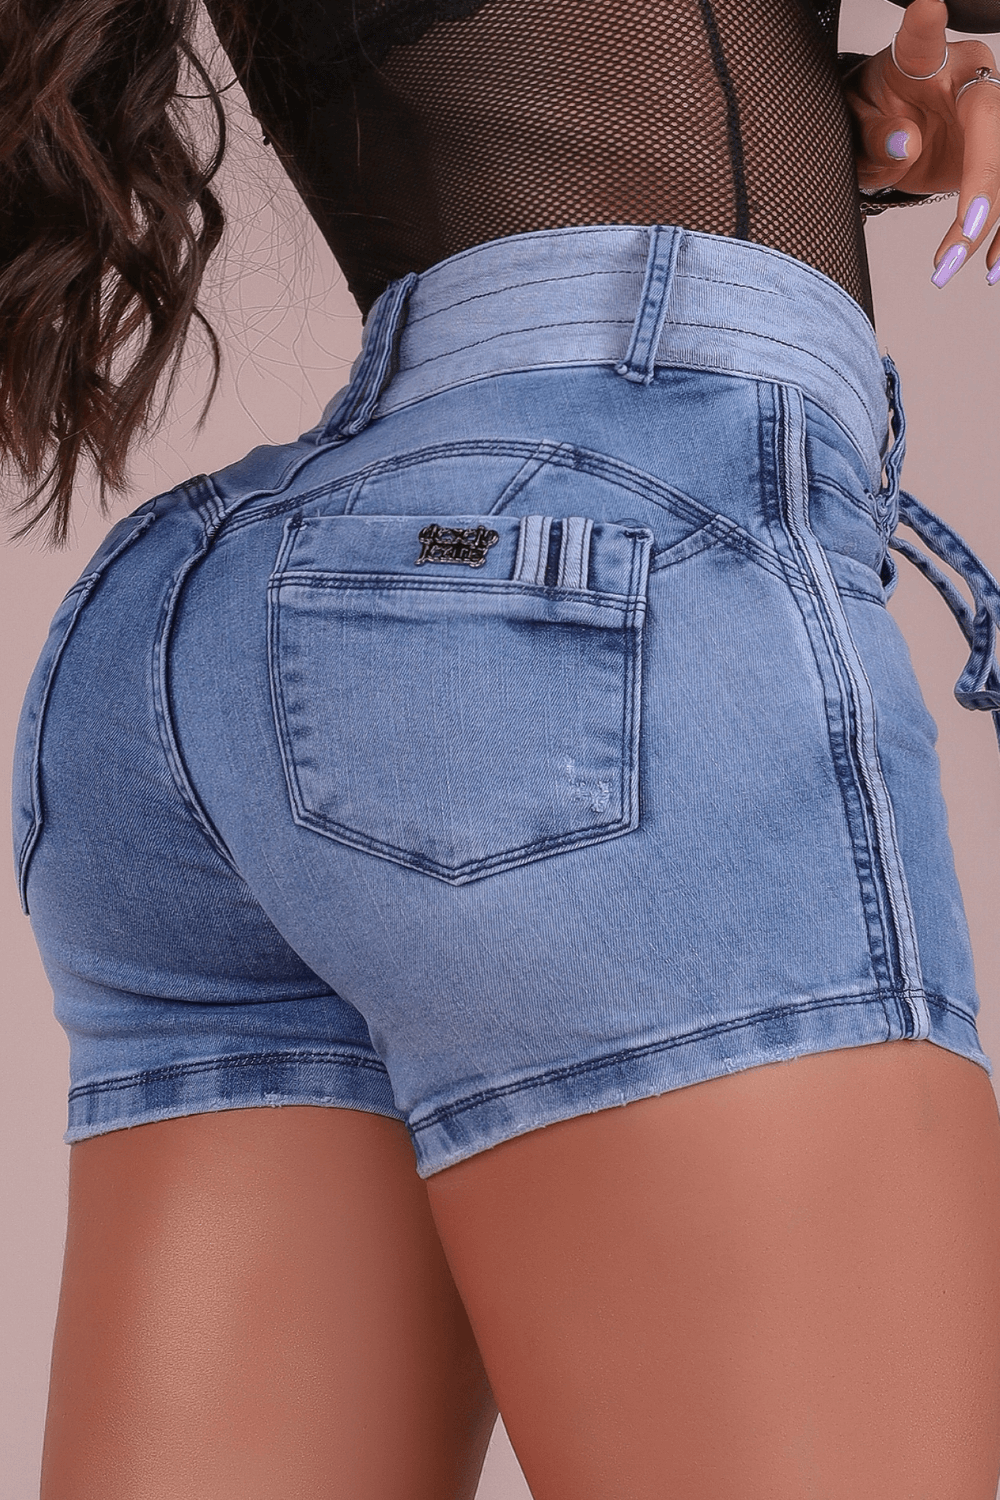 Short Jeans Cintura Alta Modelador Maravilhoso REF: 1501